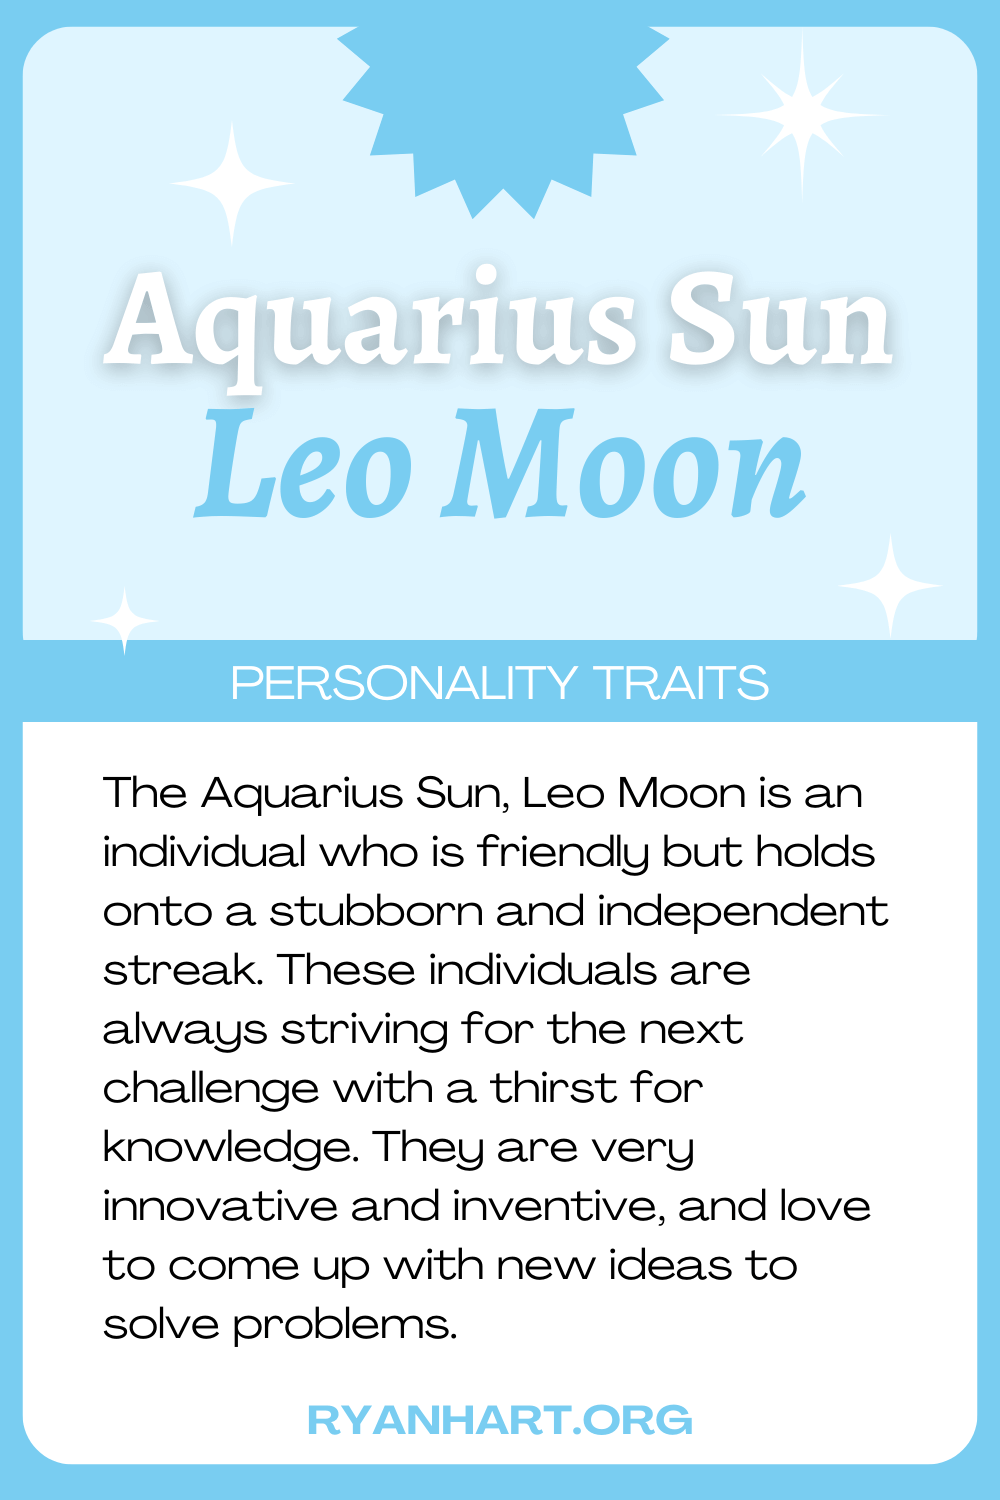 Aquarius Sun Leo Moon Description